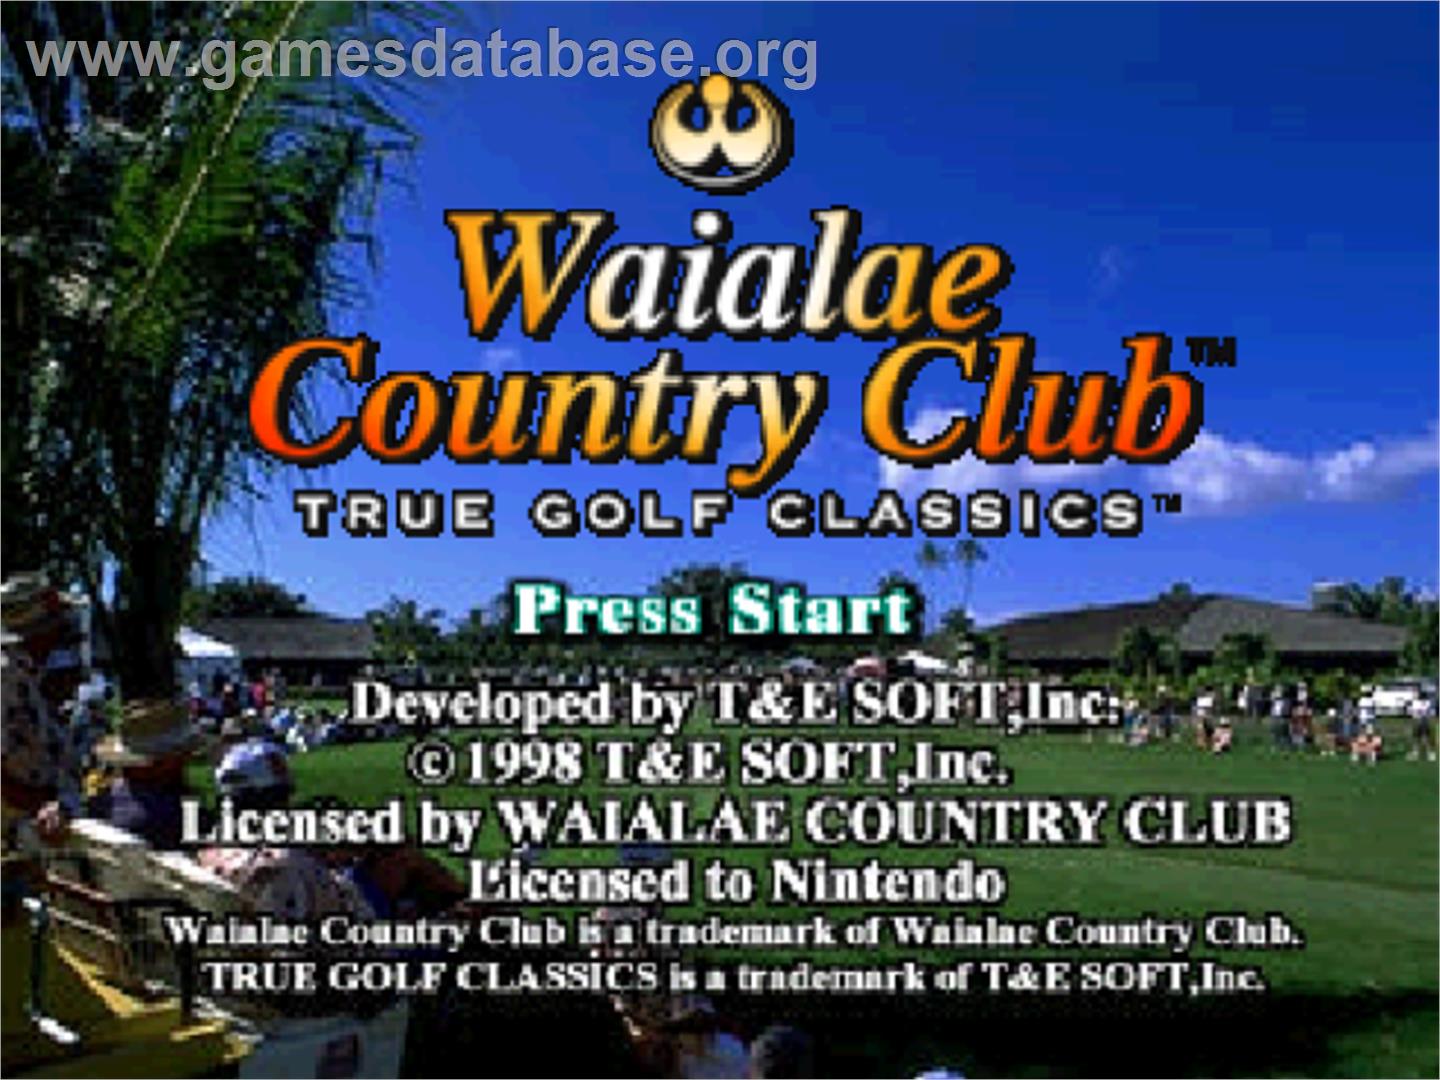 Waialae Country Club: True Golf Classics - Nintendo N64 - Artwork - Title Screen